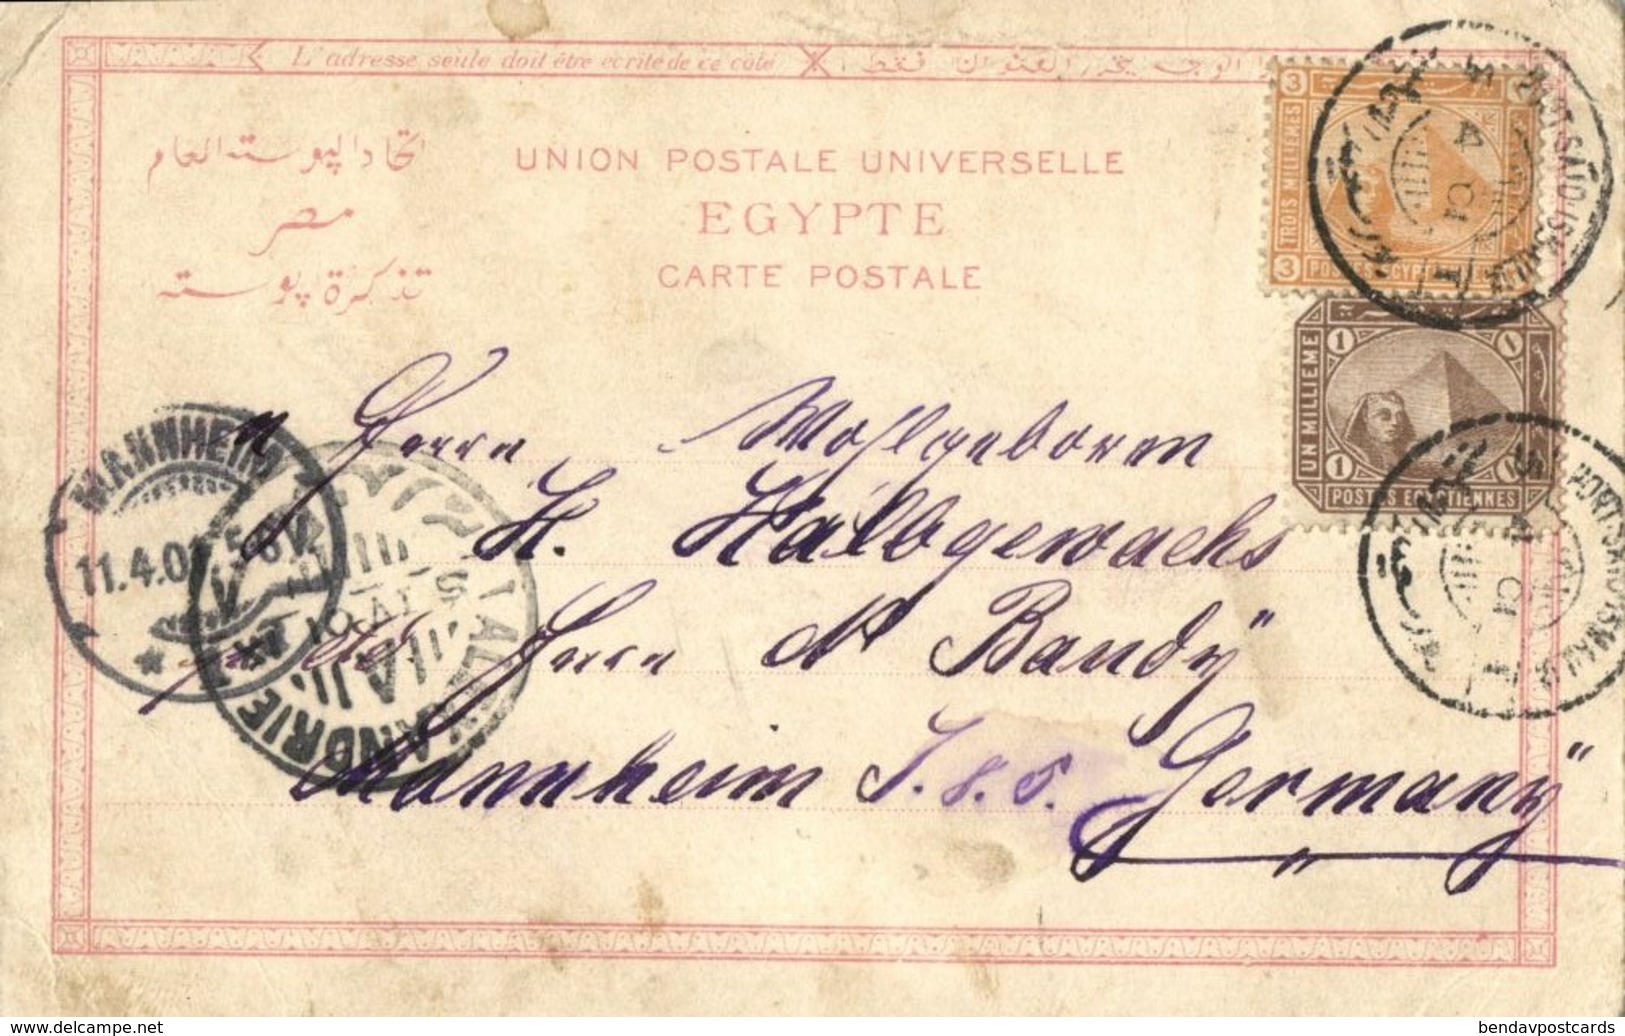 Egypt, CAIRE CAIRO, River Nile, Arab School Mosque Islam (1901) Litho Postcard - Caïro